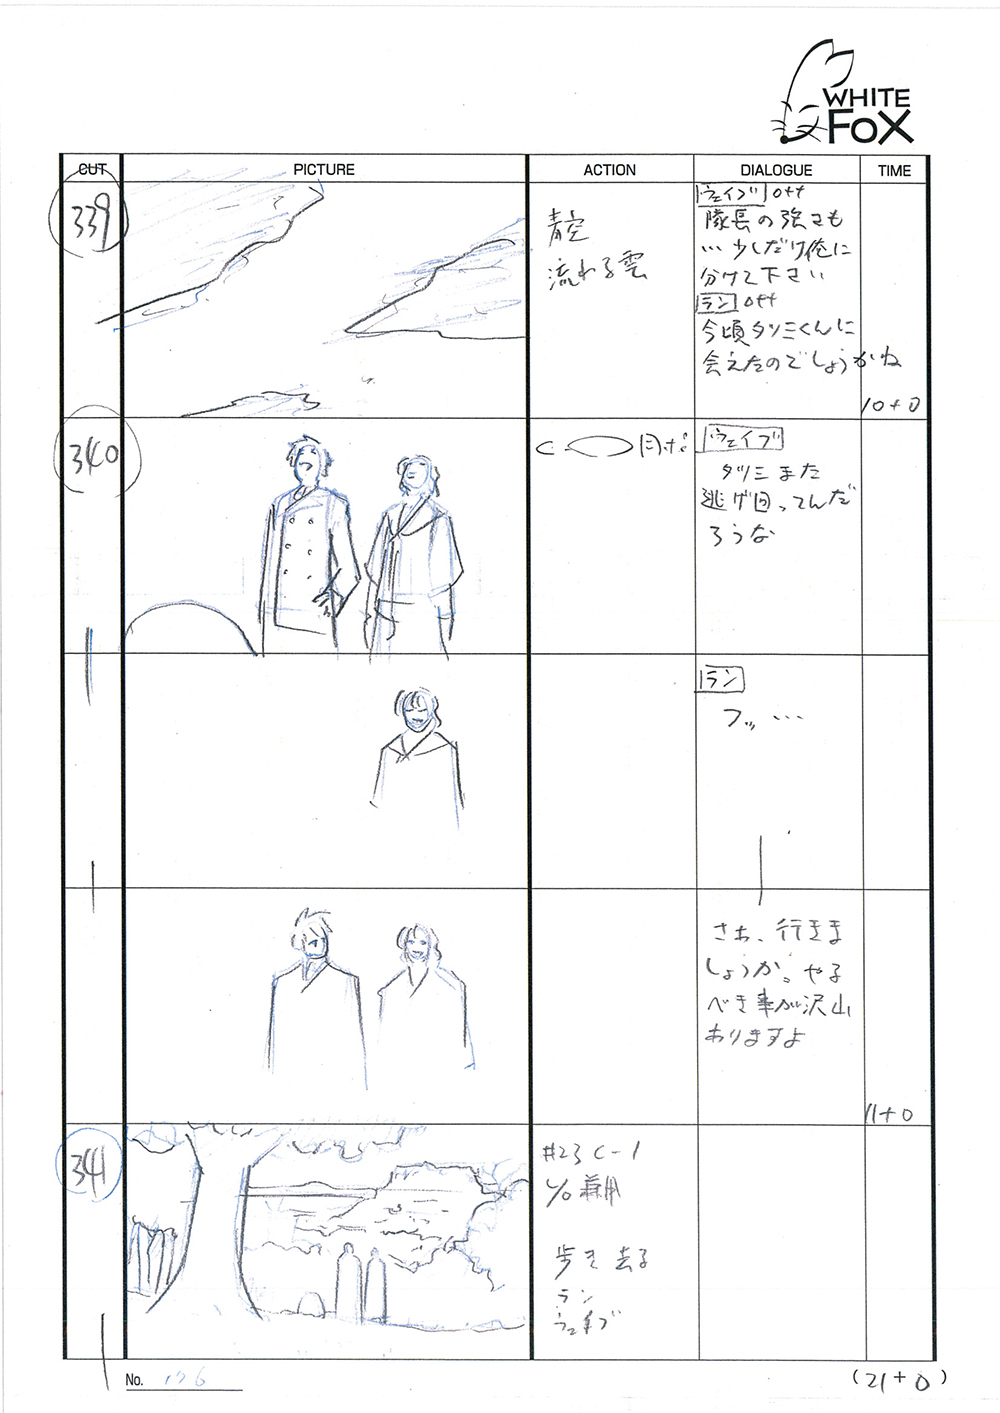 Akame ga Kill Episode 24 Storyboard Leak 181